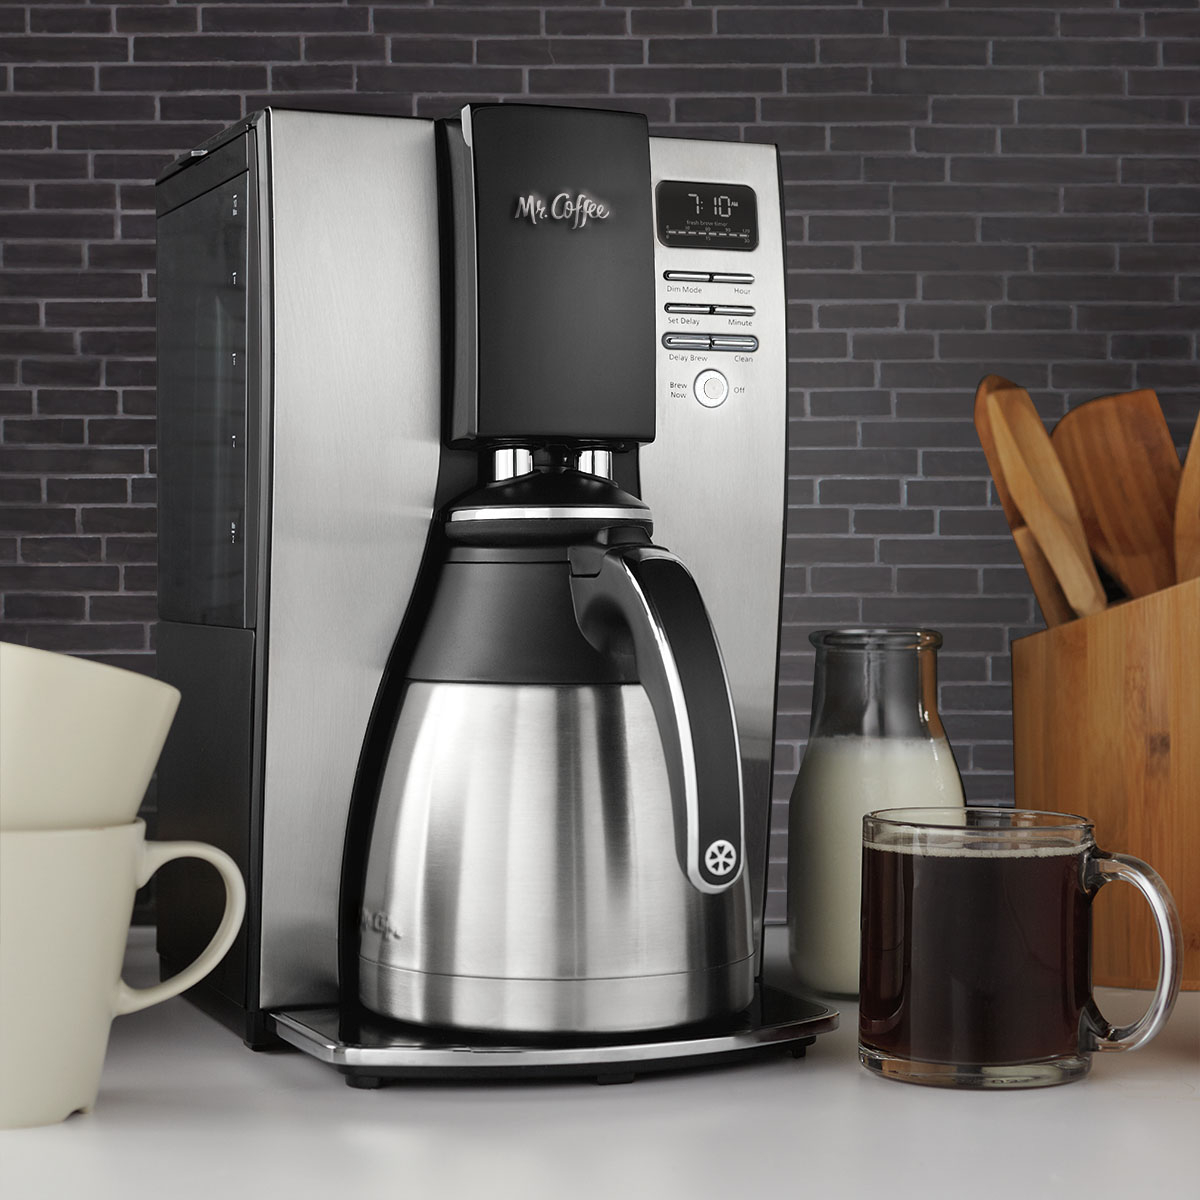 https://www.digitaltrends.com/wp-content/uploads/2020/09/mr-coffee-optimal-brew-10-cup-programmable-coffee-maker.jpg?fit=625%2C625&p=1